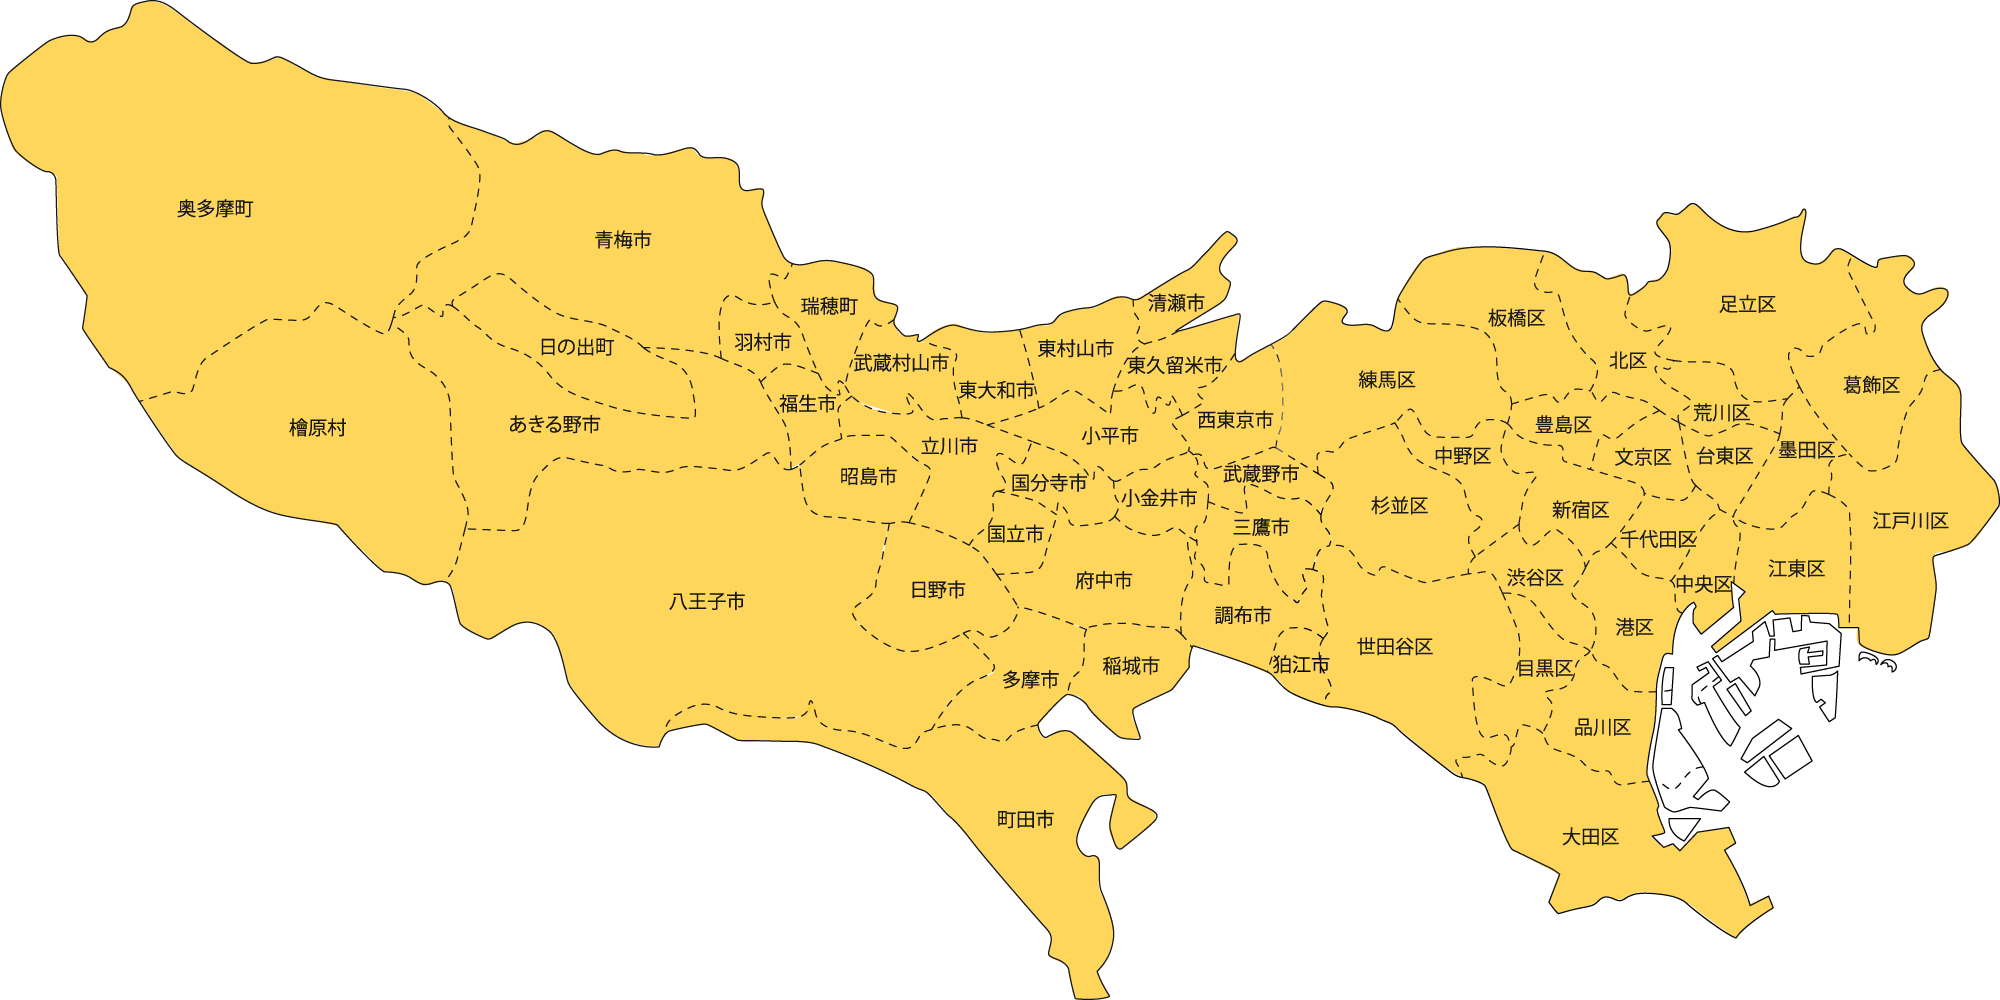 tokyo-map